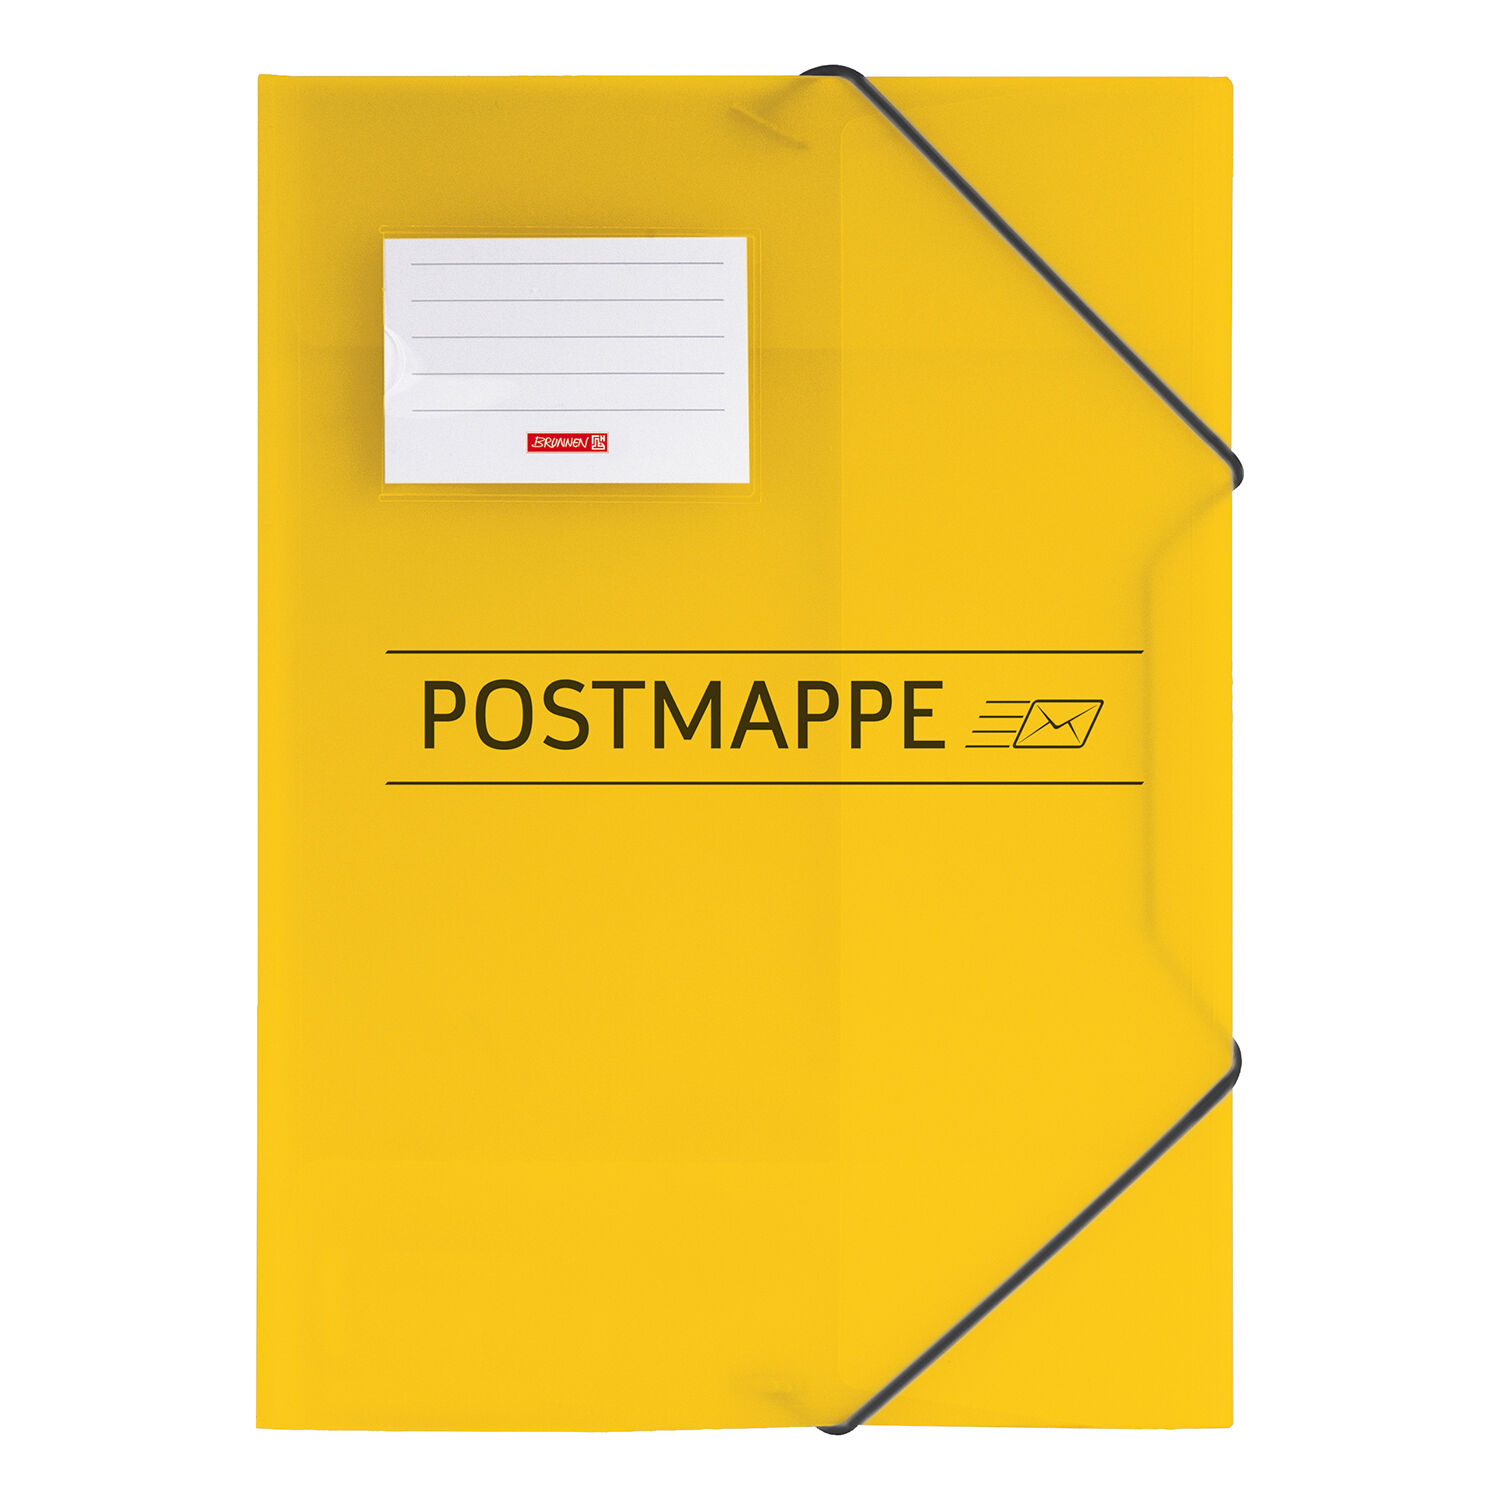 NEU Postmappe aus Kunststoff, DIN A4, mit Gummizug